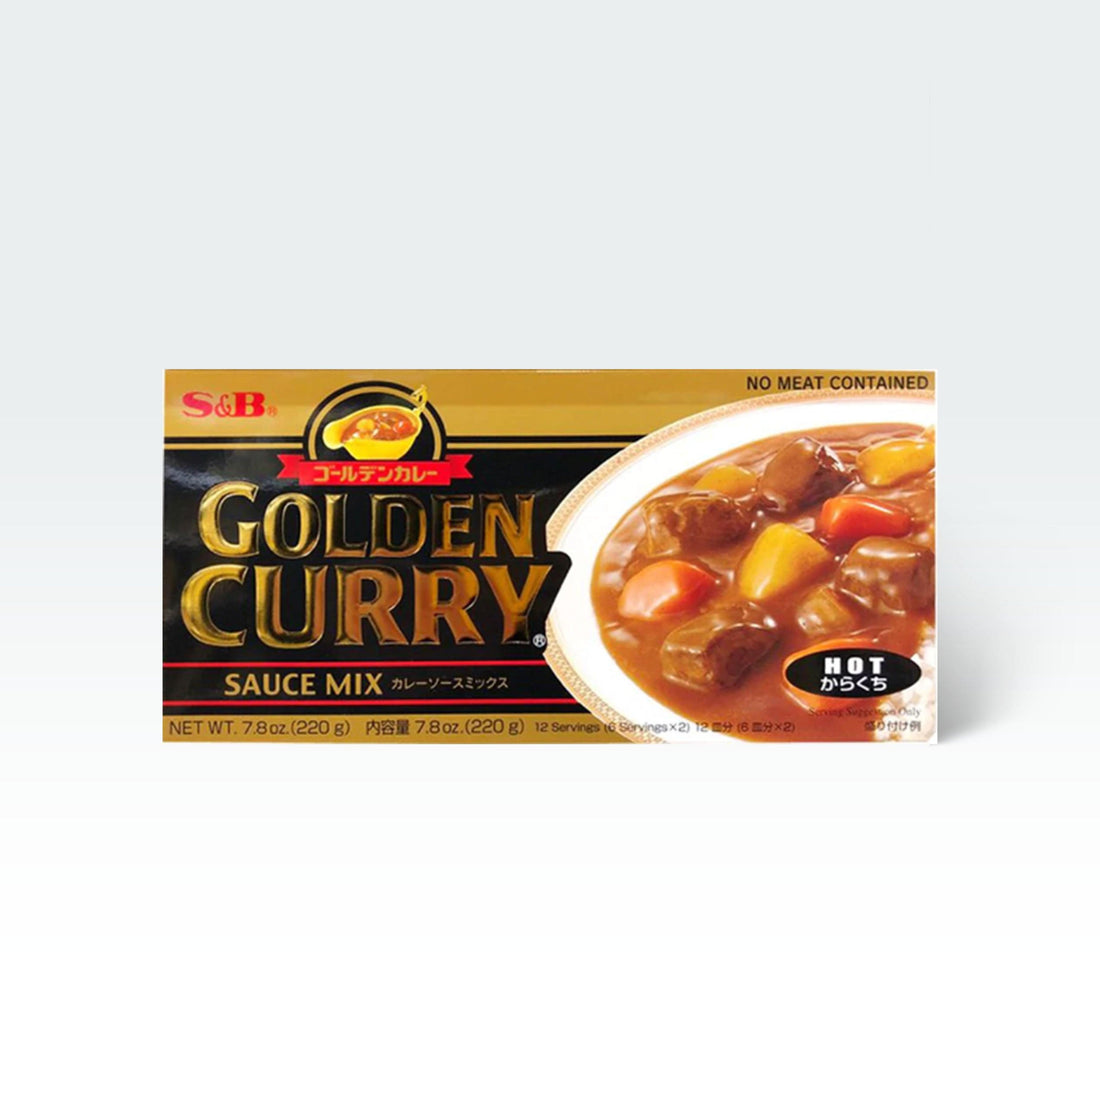 S&B Golden Curry Sauce Mix Hot 7.8oz(220g) - Anytime Basket